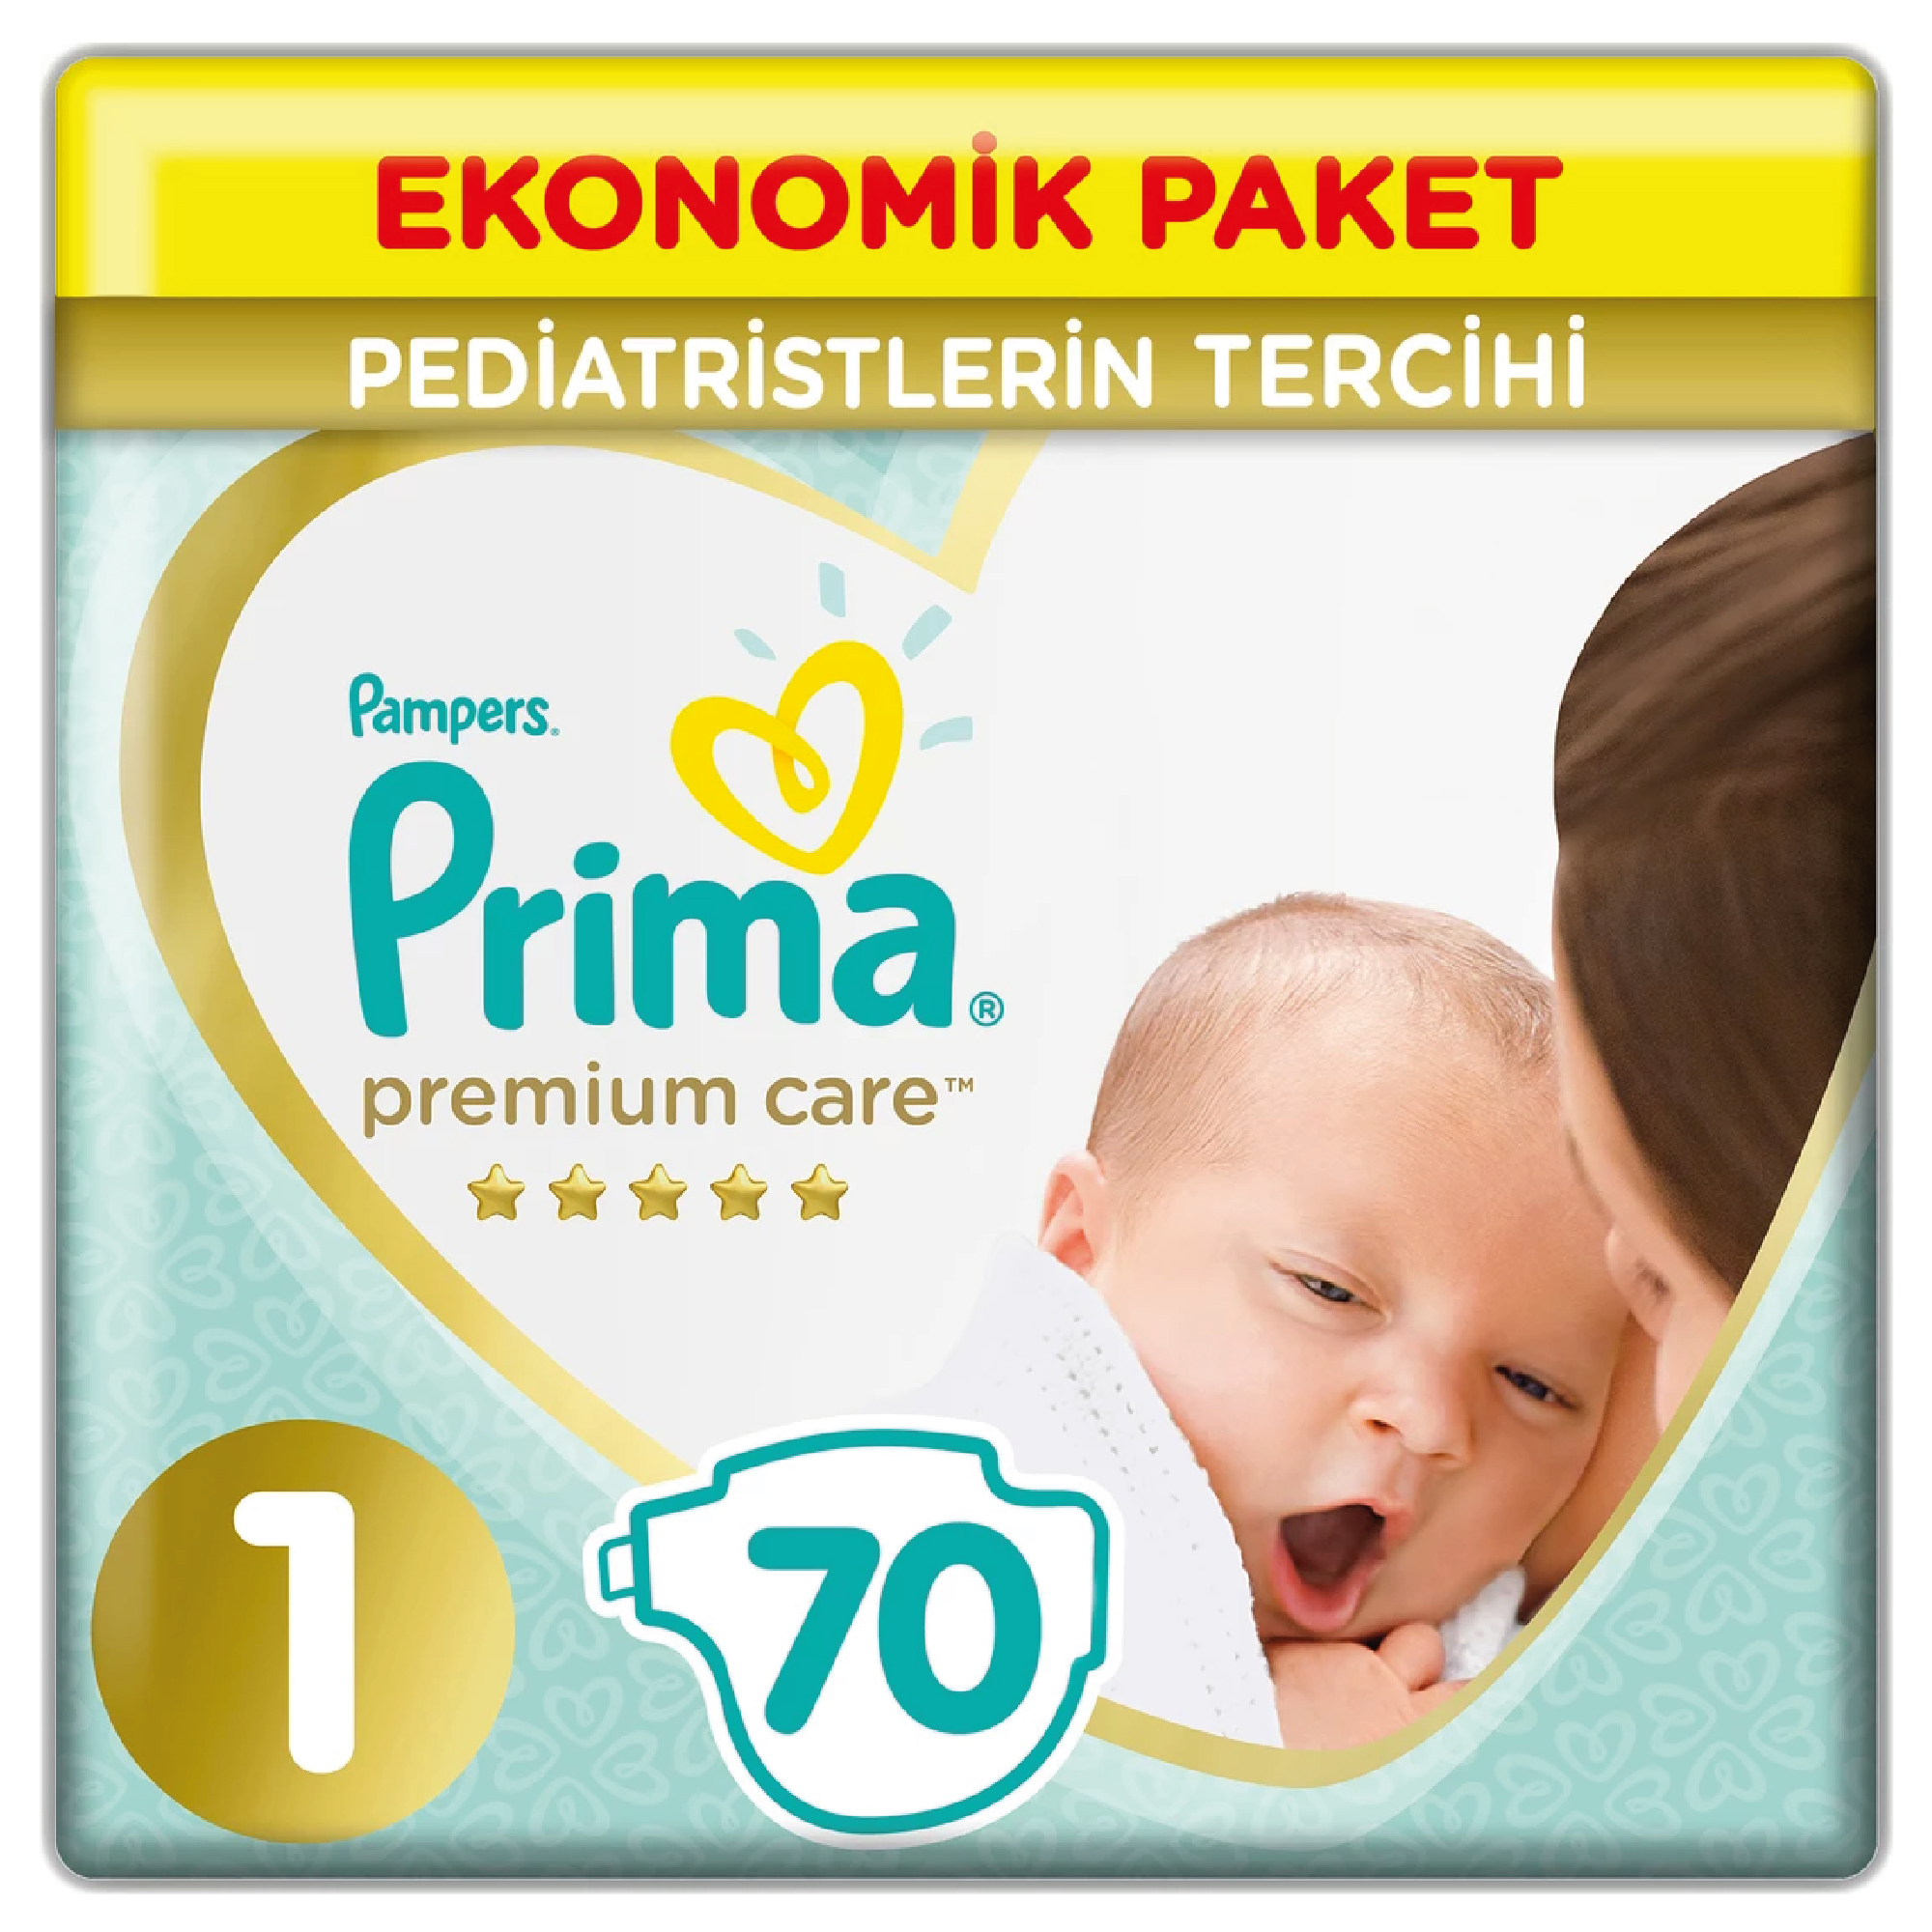 Prima Premium Care Ekonomik Paket 1 Beden 70'li Yeni Doğan 8001841742151